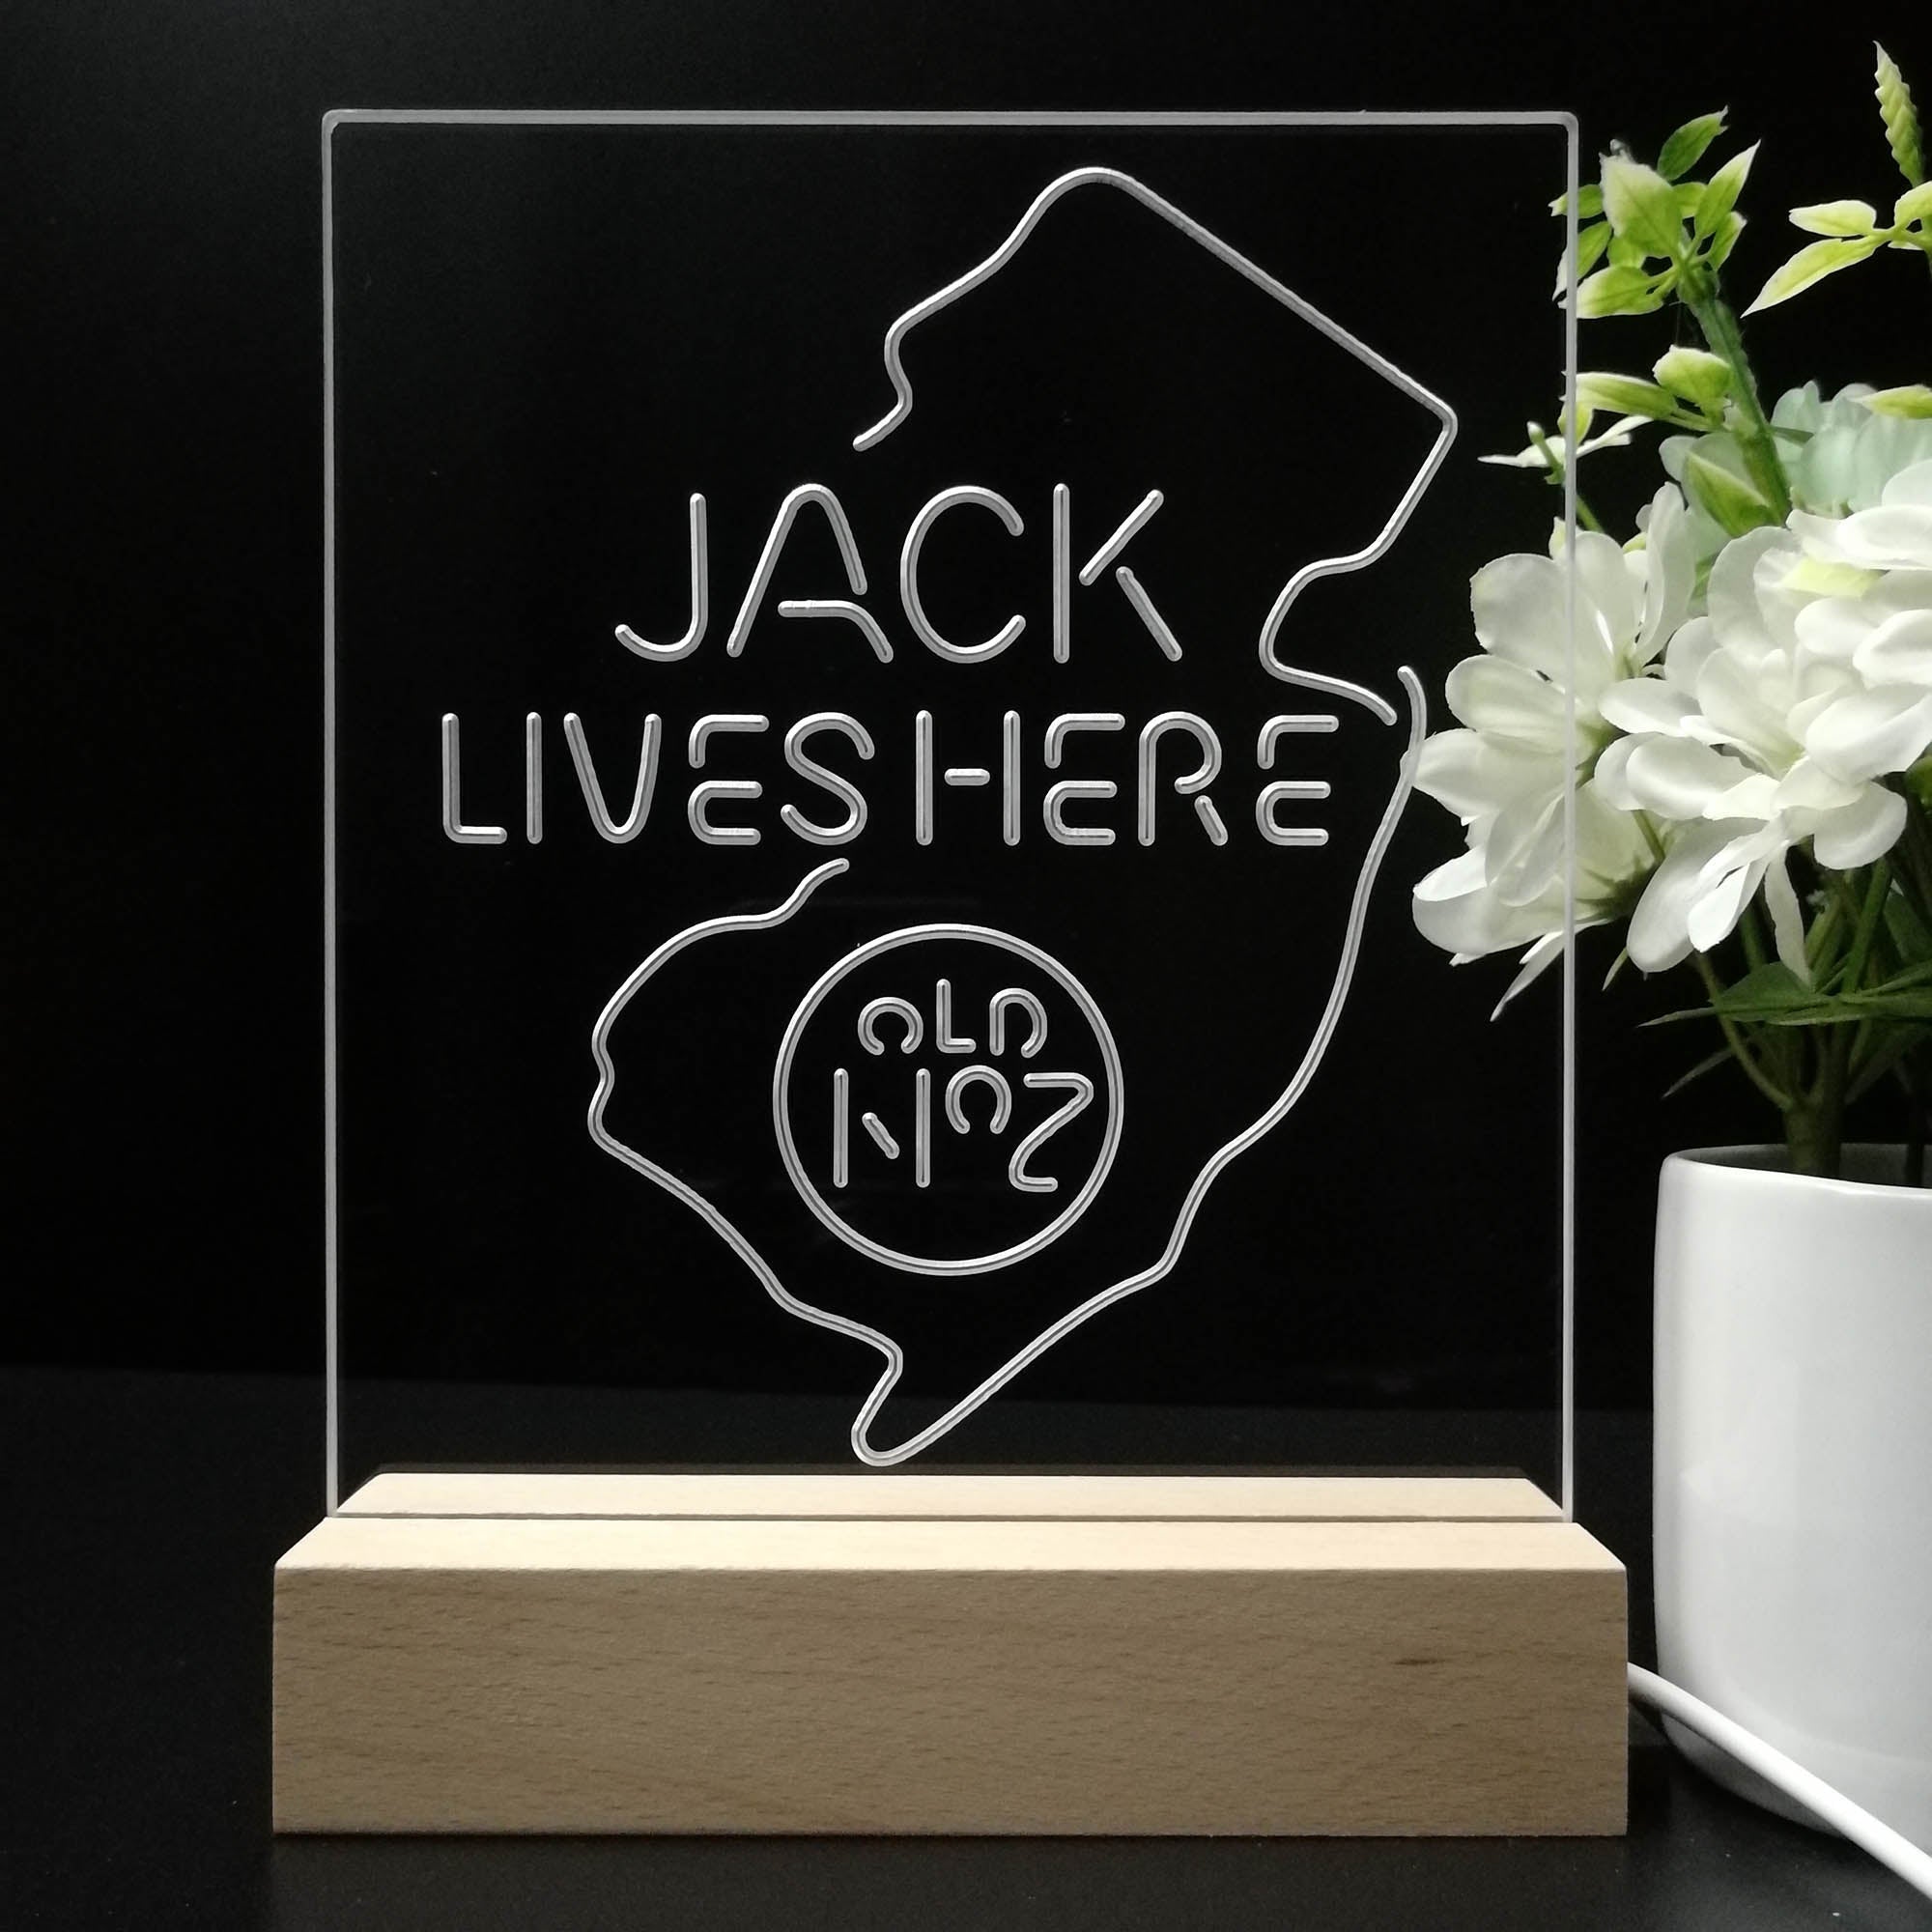 New Jersey Jack Lives Here Night Light Neon Pub Bar Lamp